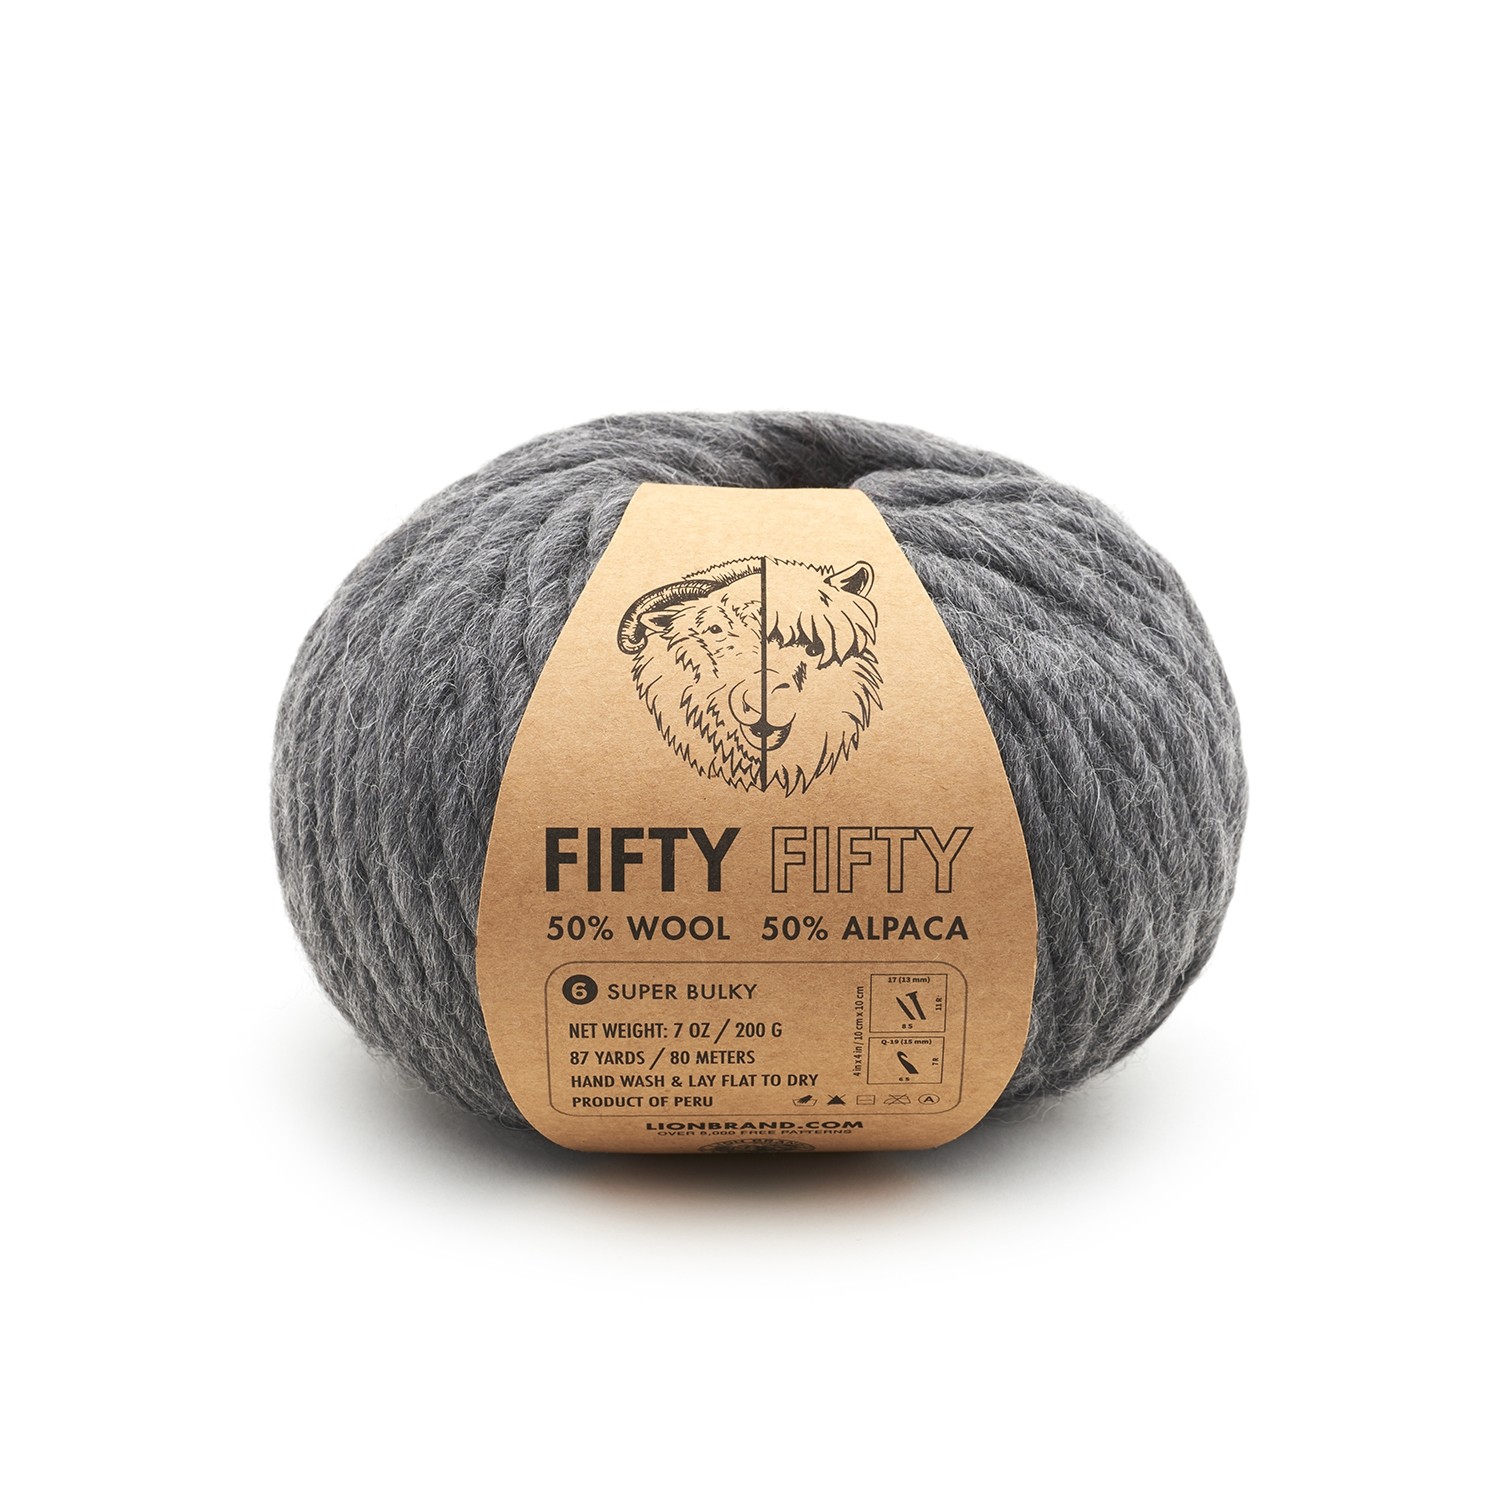 Fifty Fifty Yarn in Dark Gray